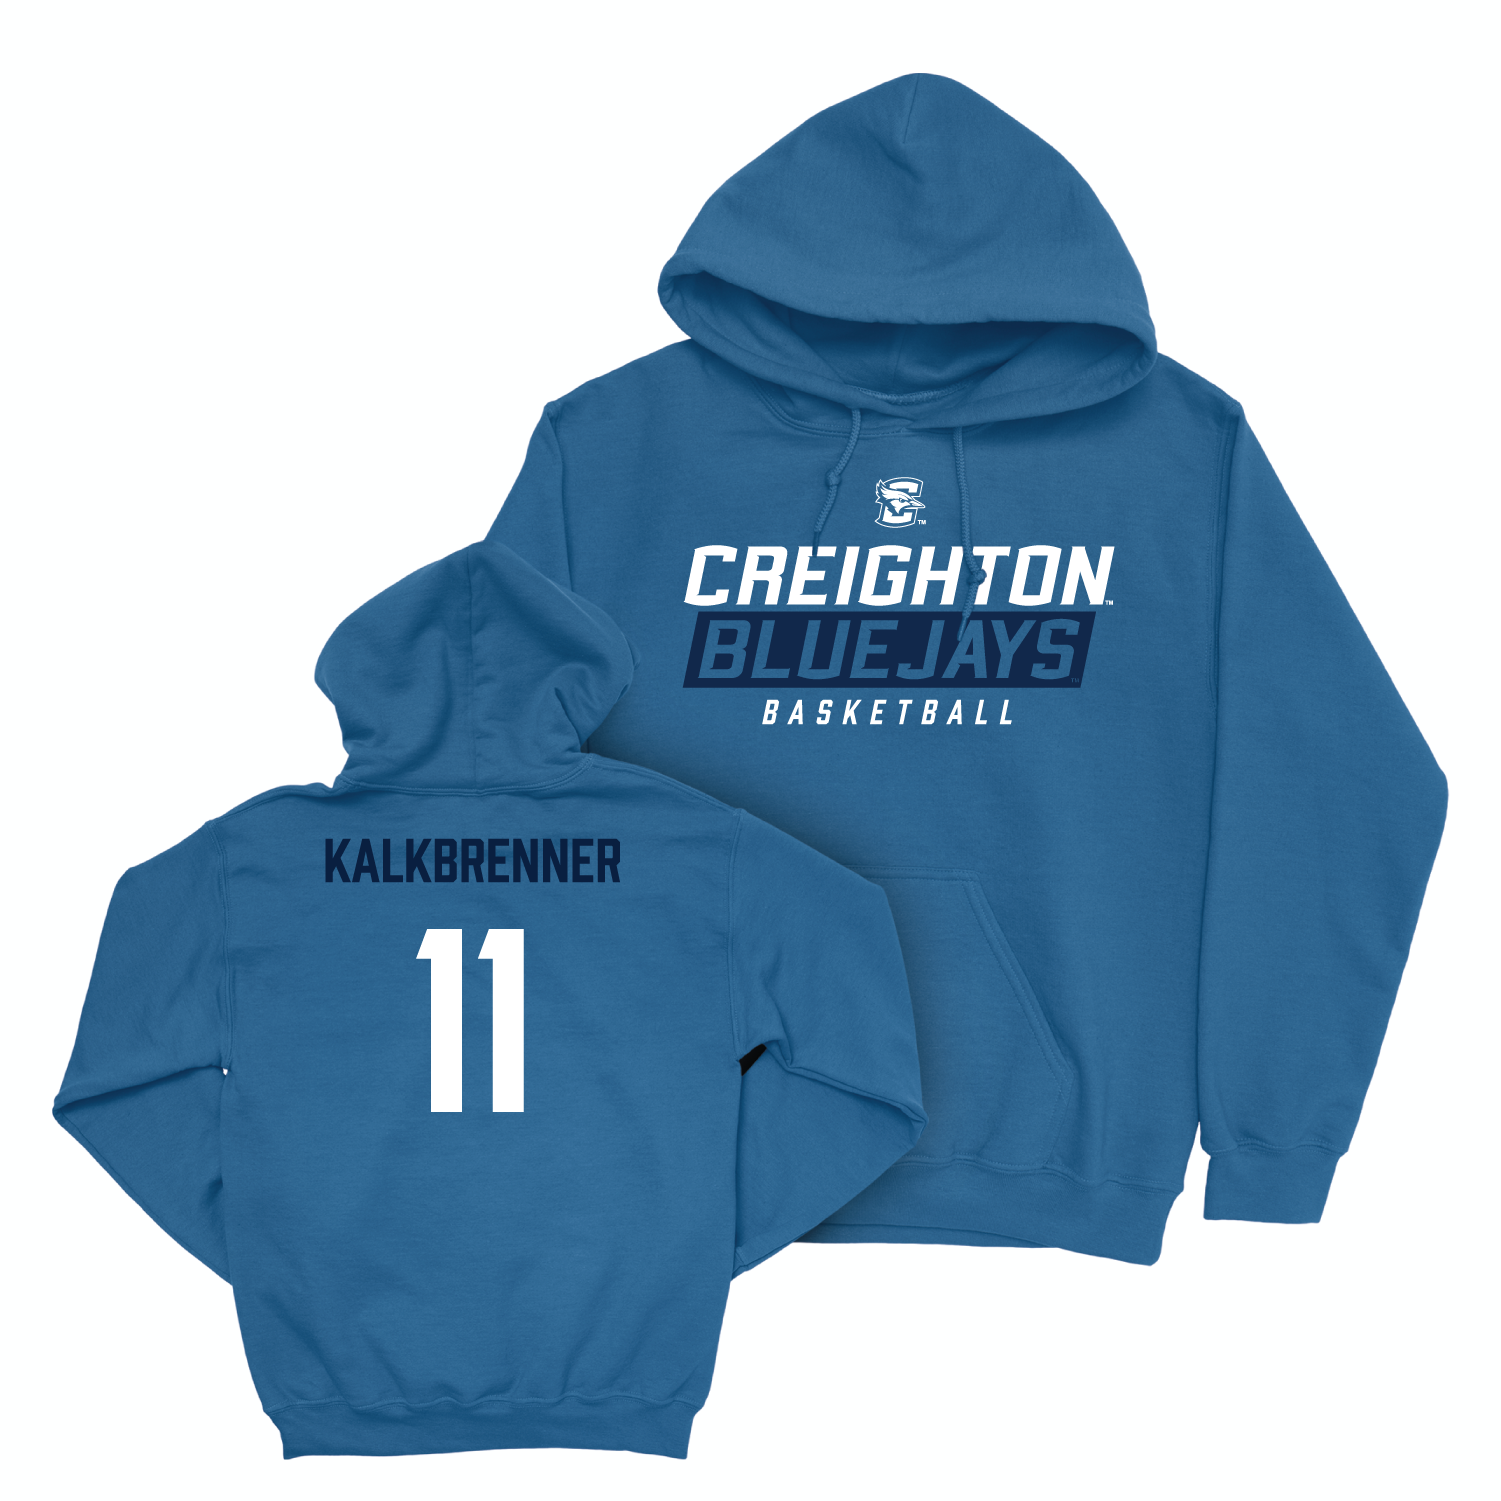 Creighton Men's Basketball Blue Bluejays Hoodie - Ryan Kalkbrenner Youth Small